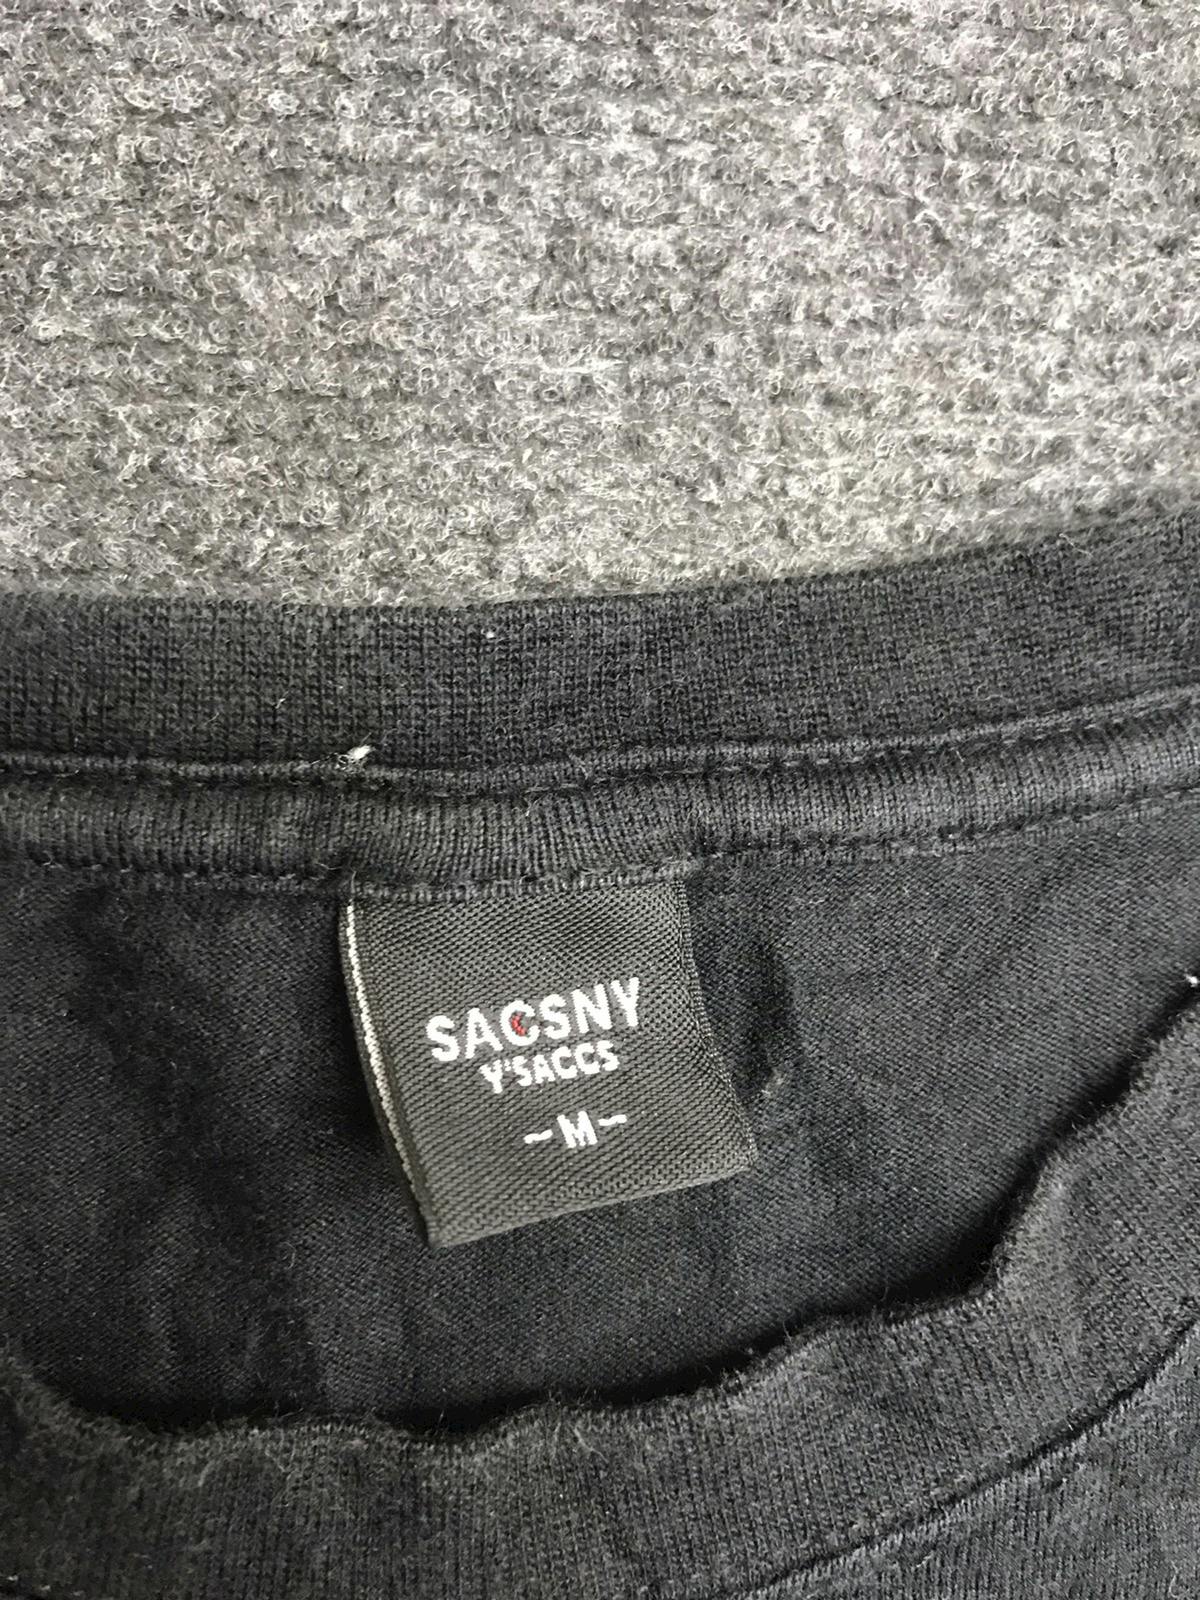 SACSNY YSACCS Shirt - 2